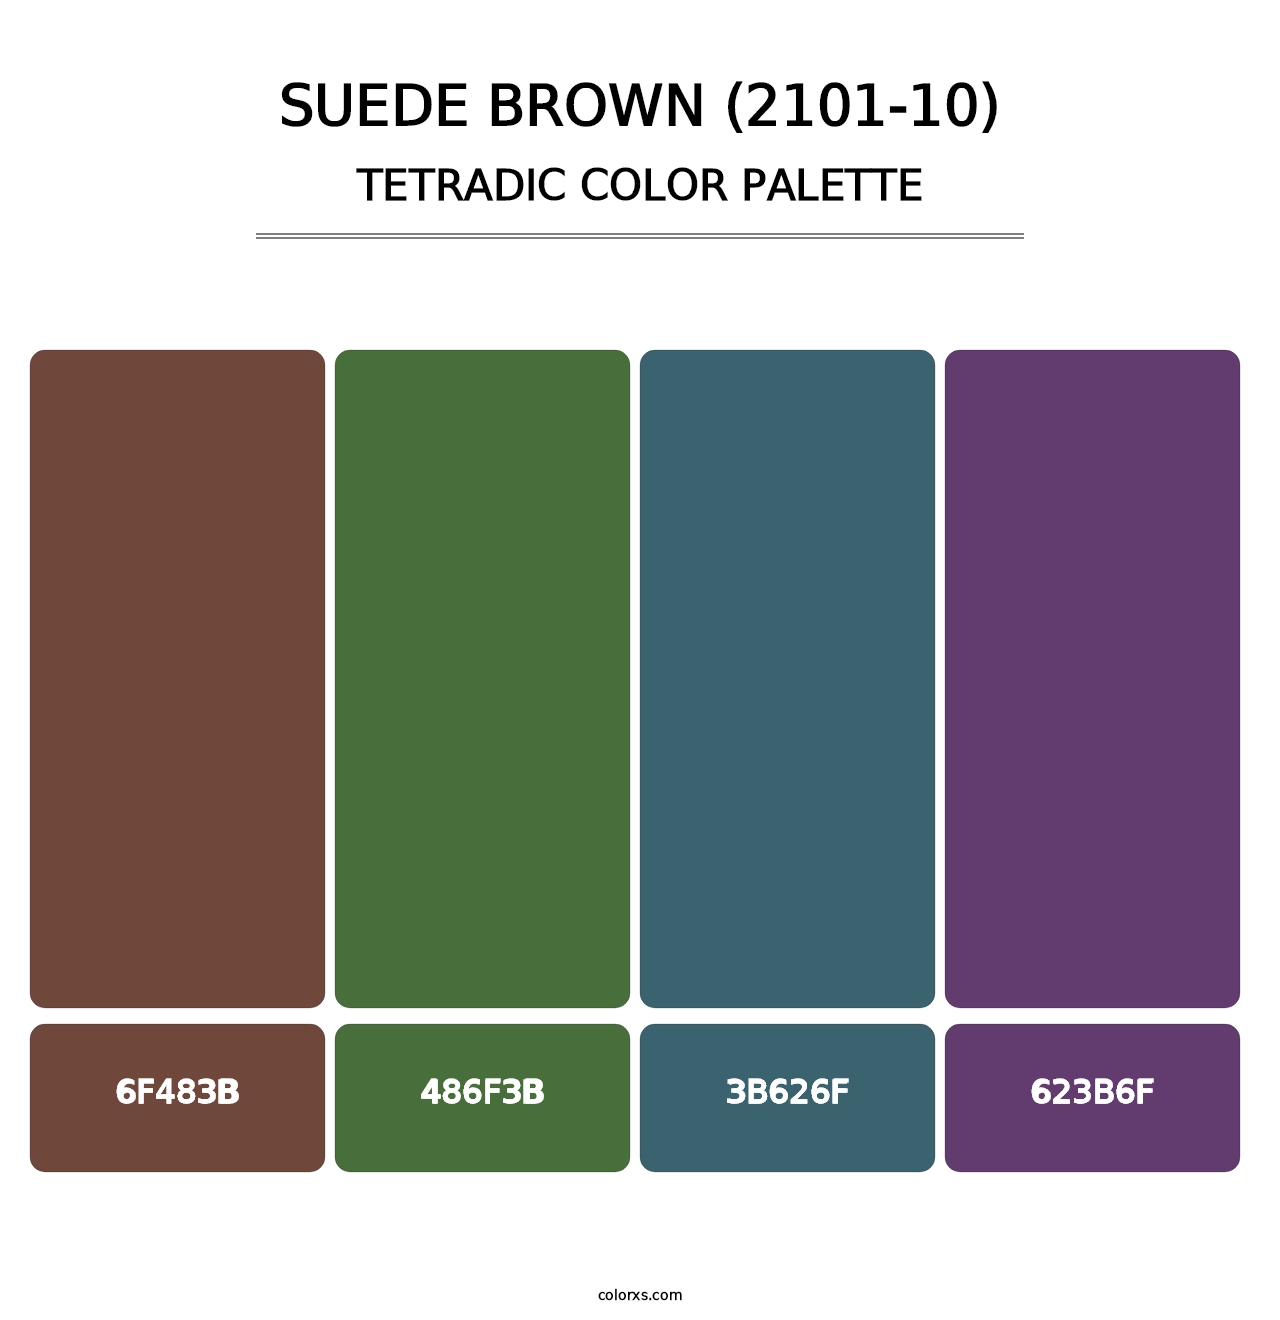 Suede Brown (2101-10) - Tetradic Color Palette